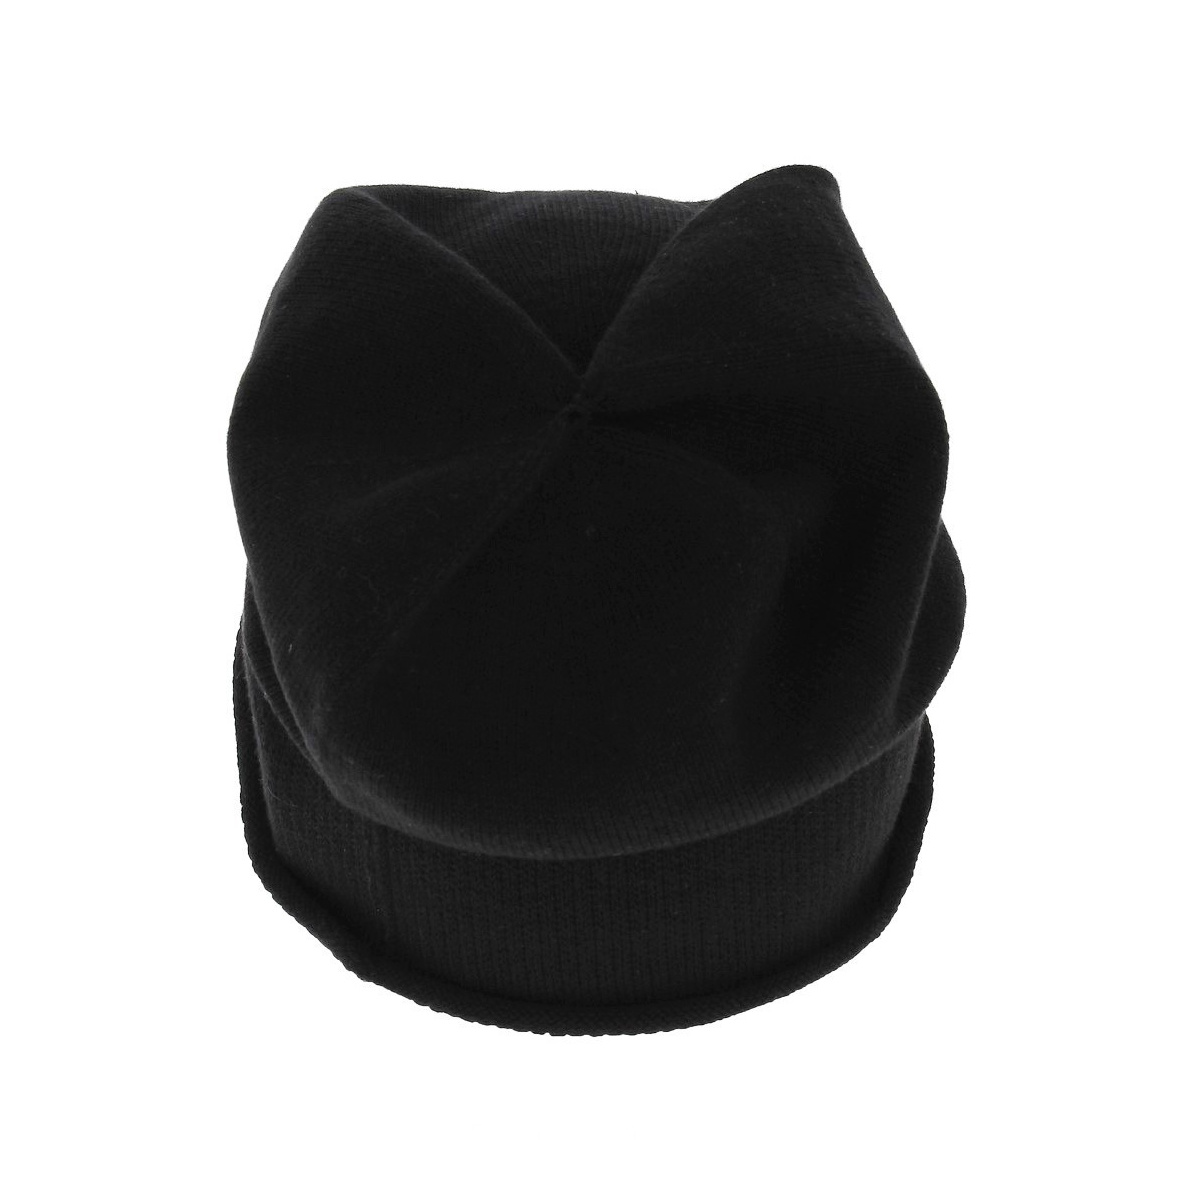 Bonnet de nuit noir made in france Reference : 2056